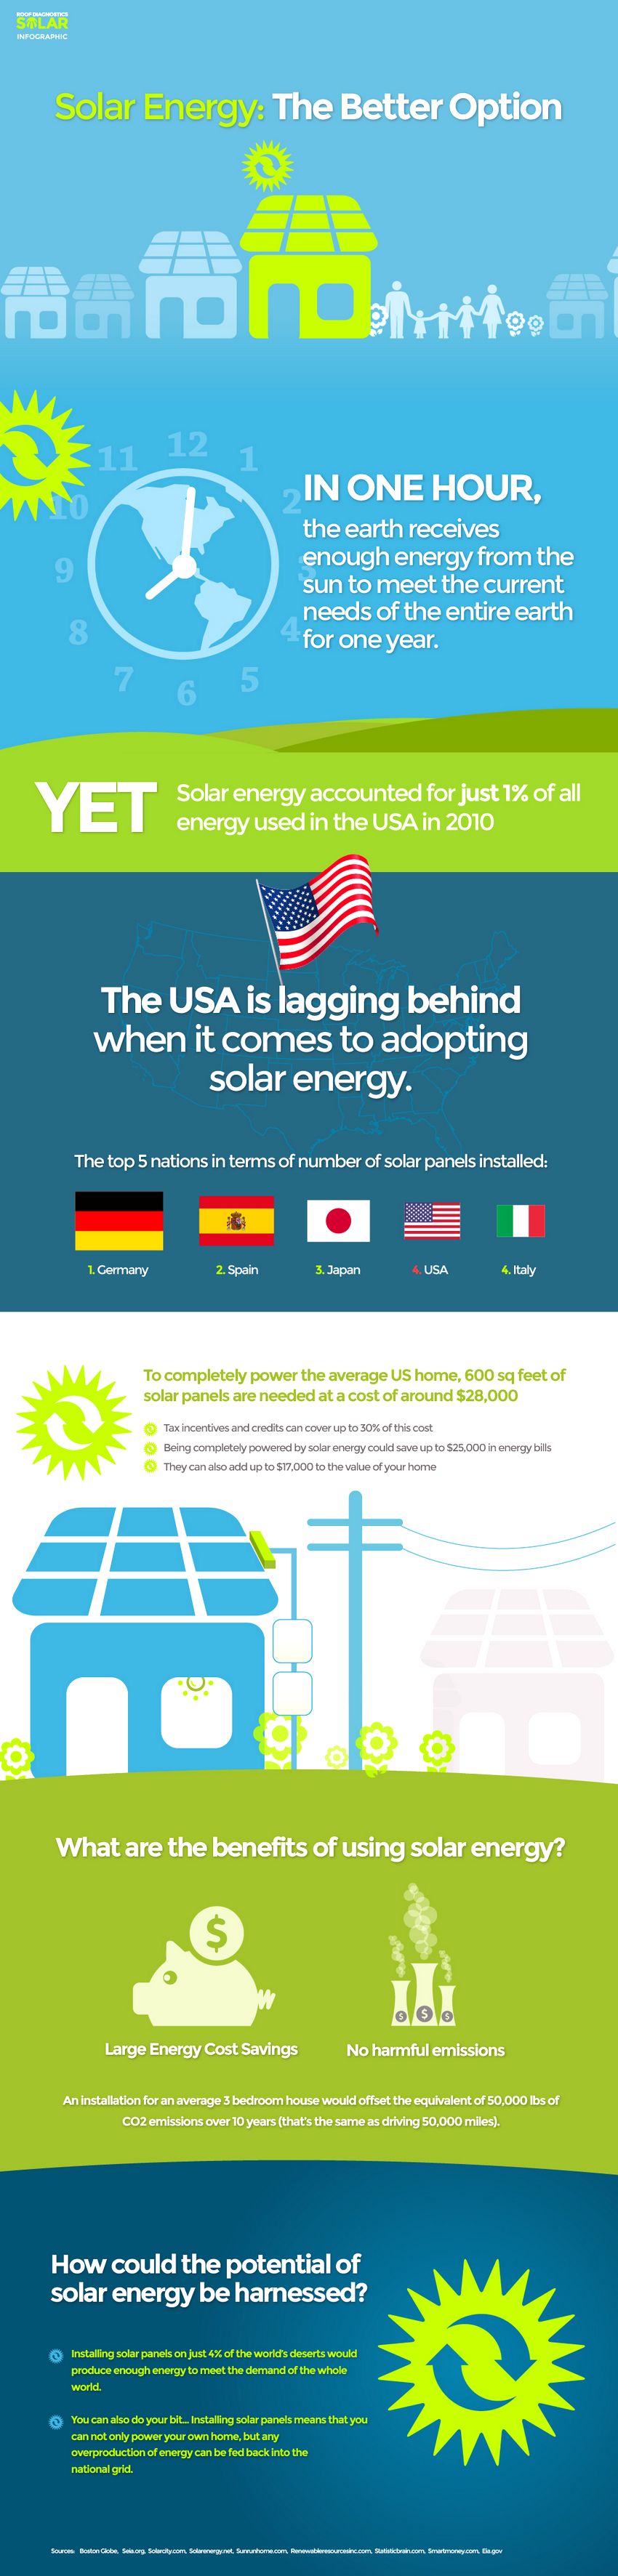 solar energy infographic information